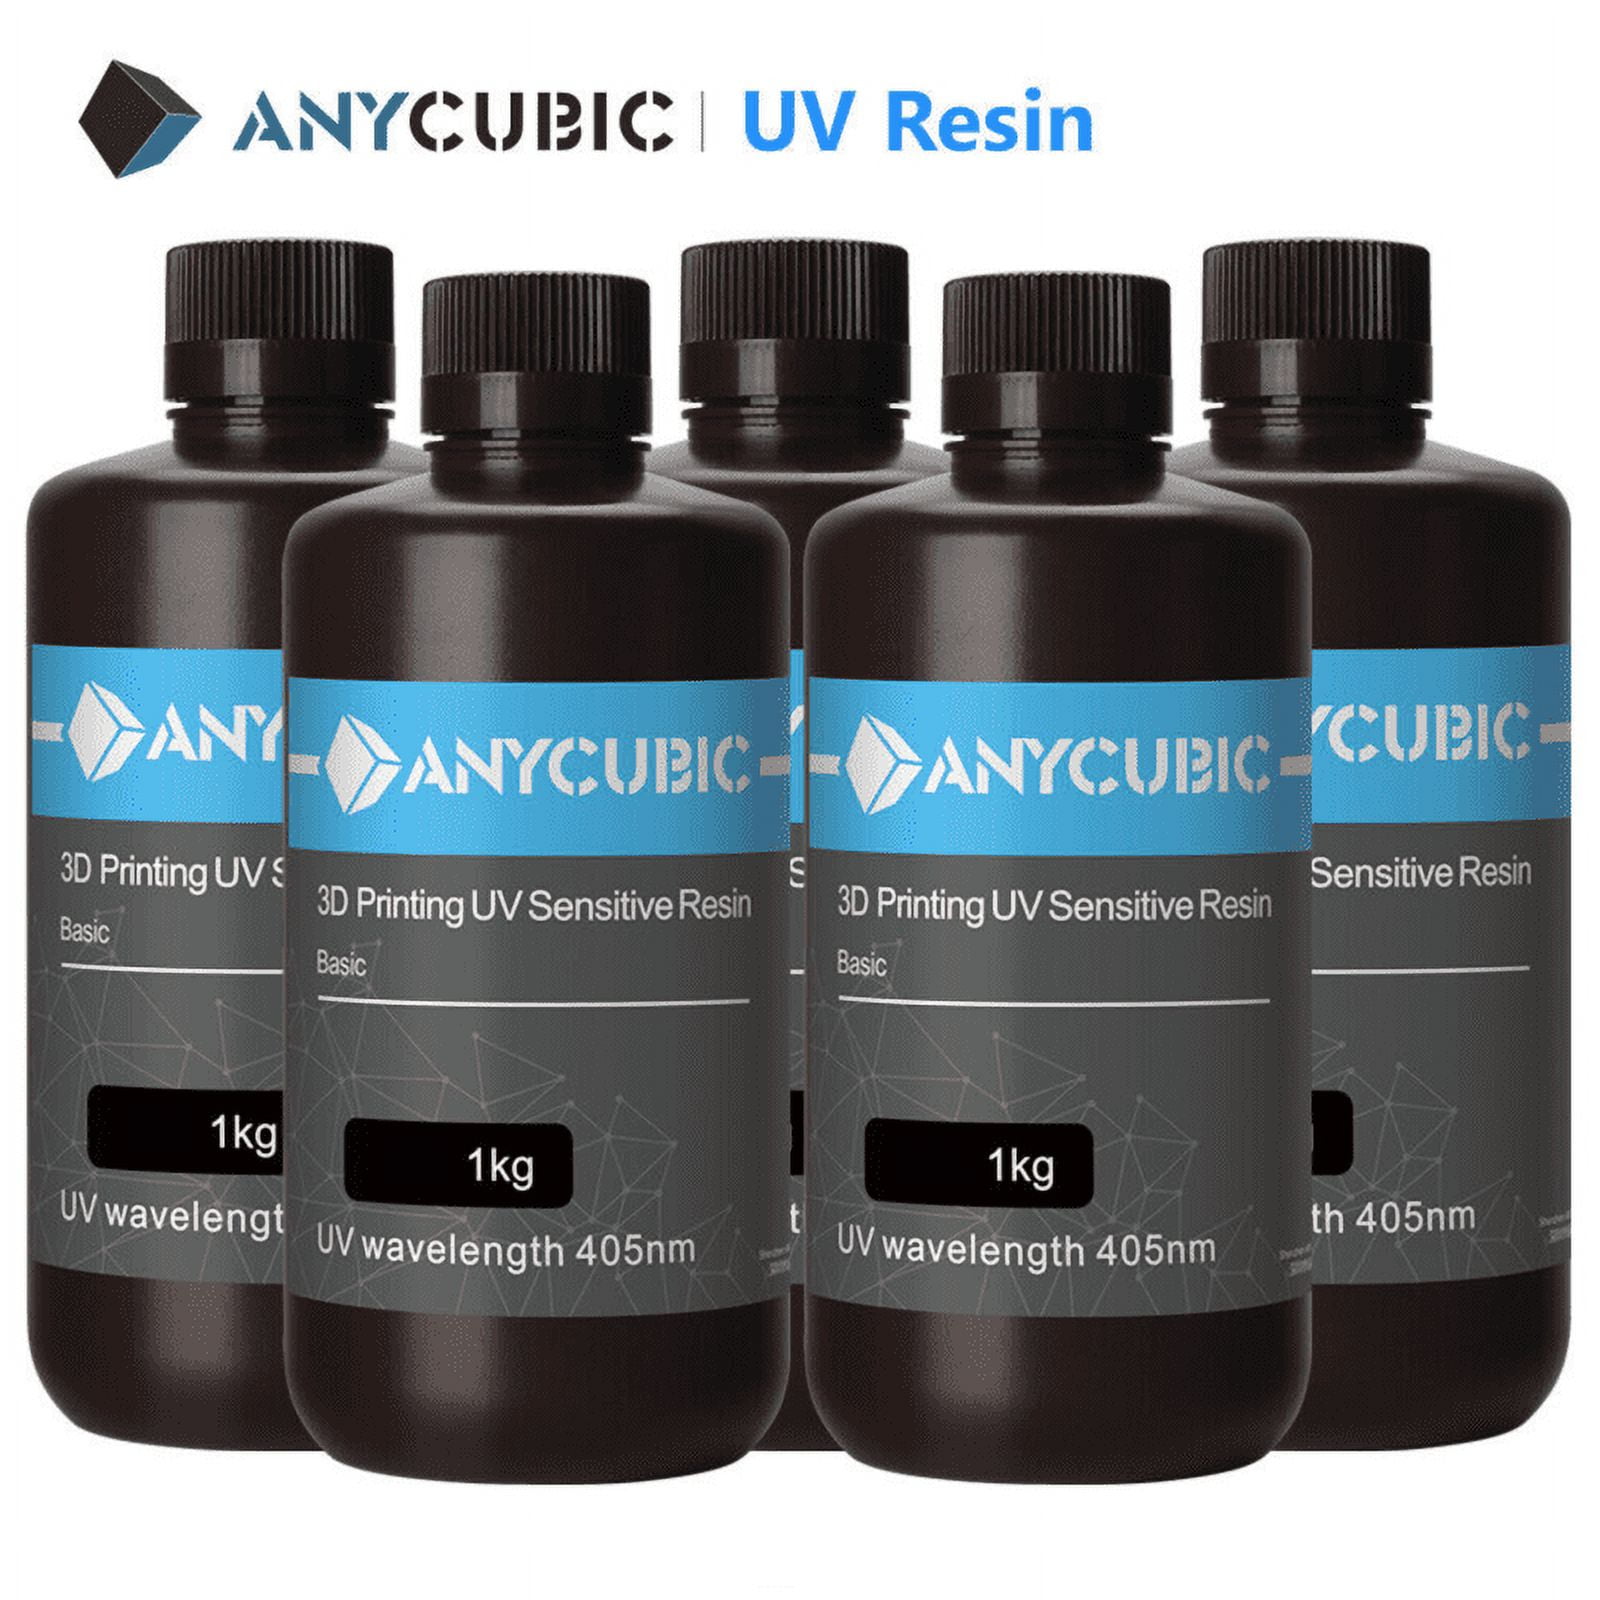 Anycubic UV 405nm 3D Resin 1L - 3DPrintersBay